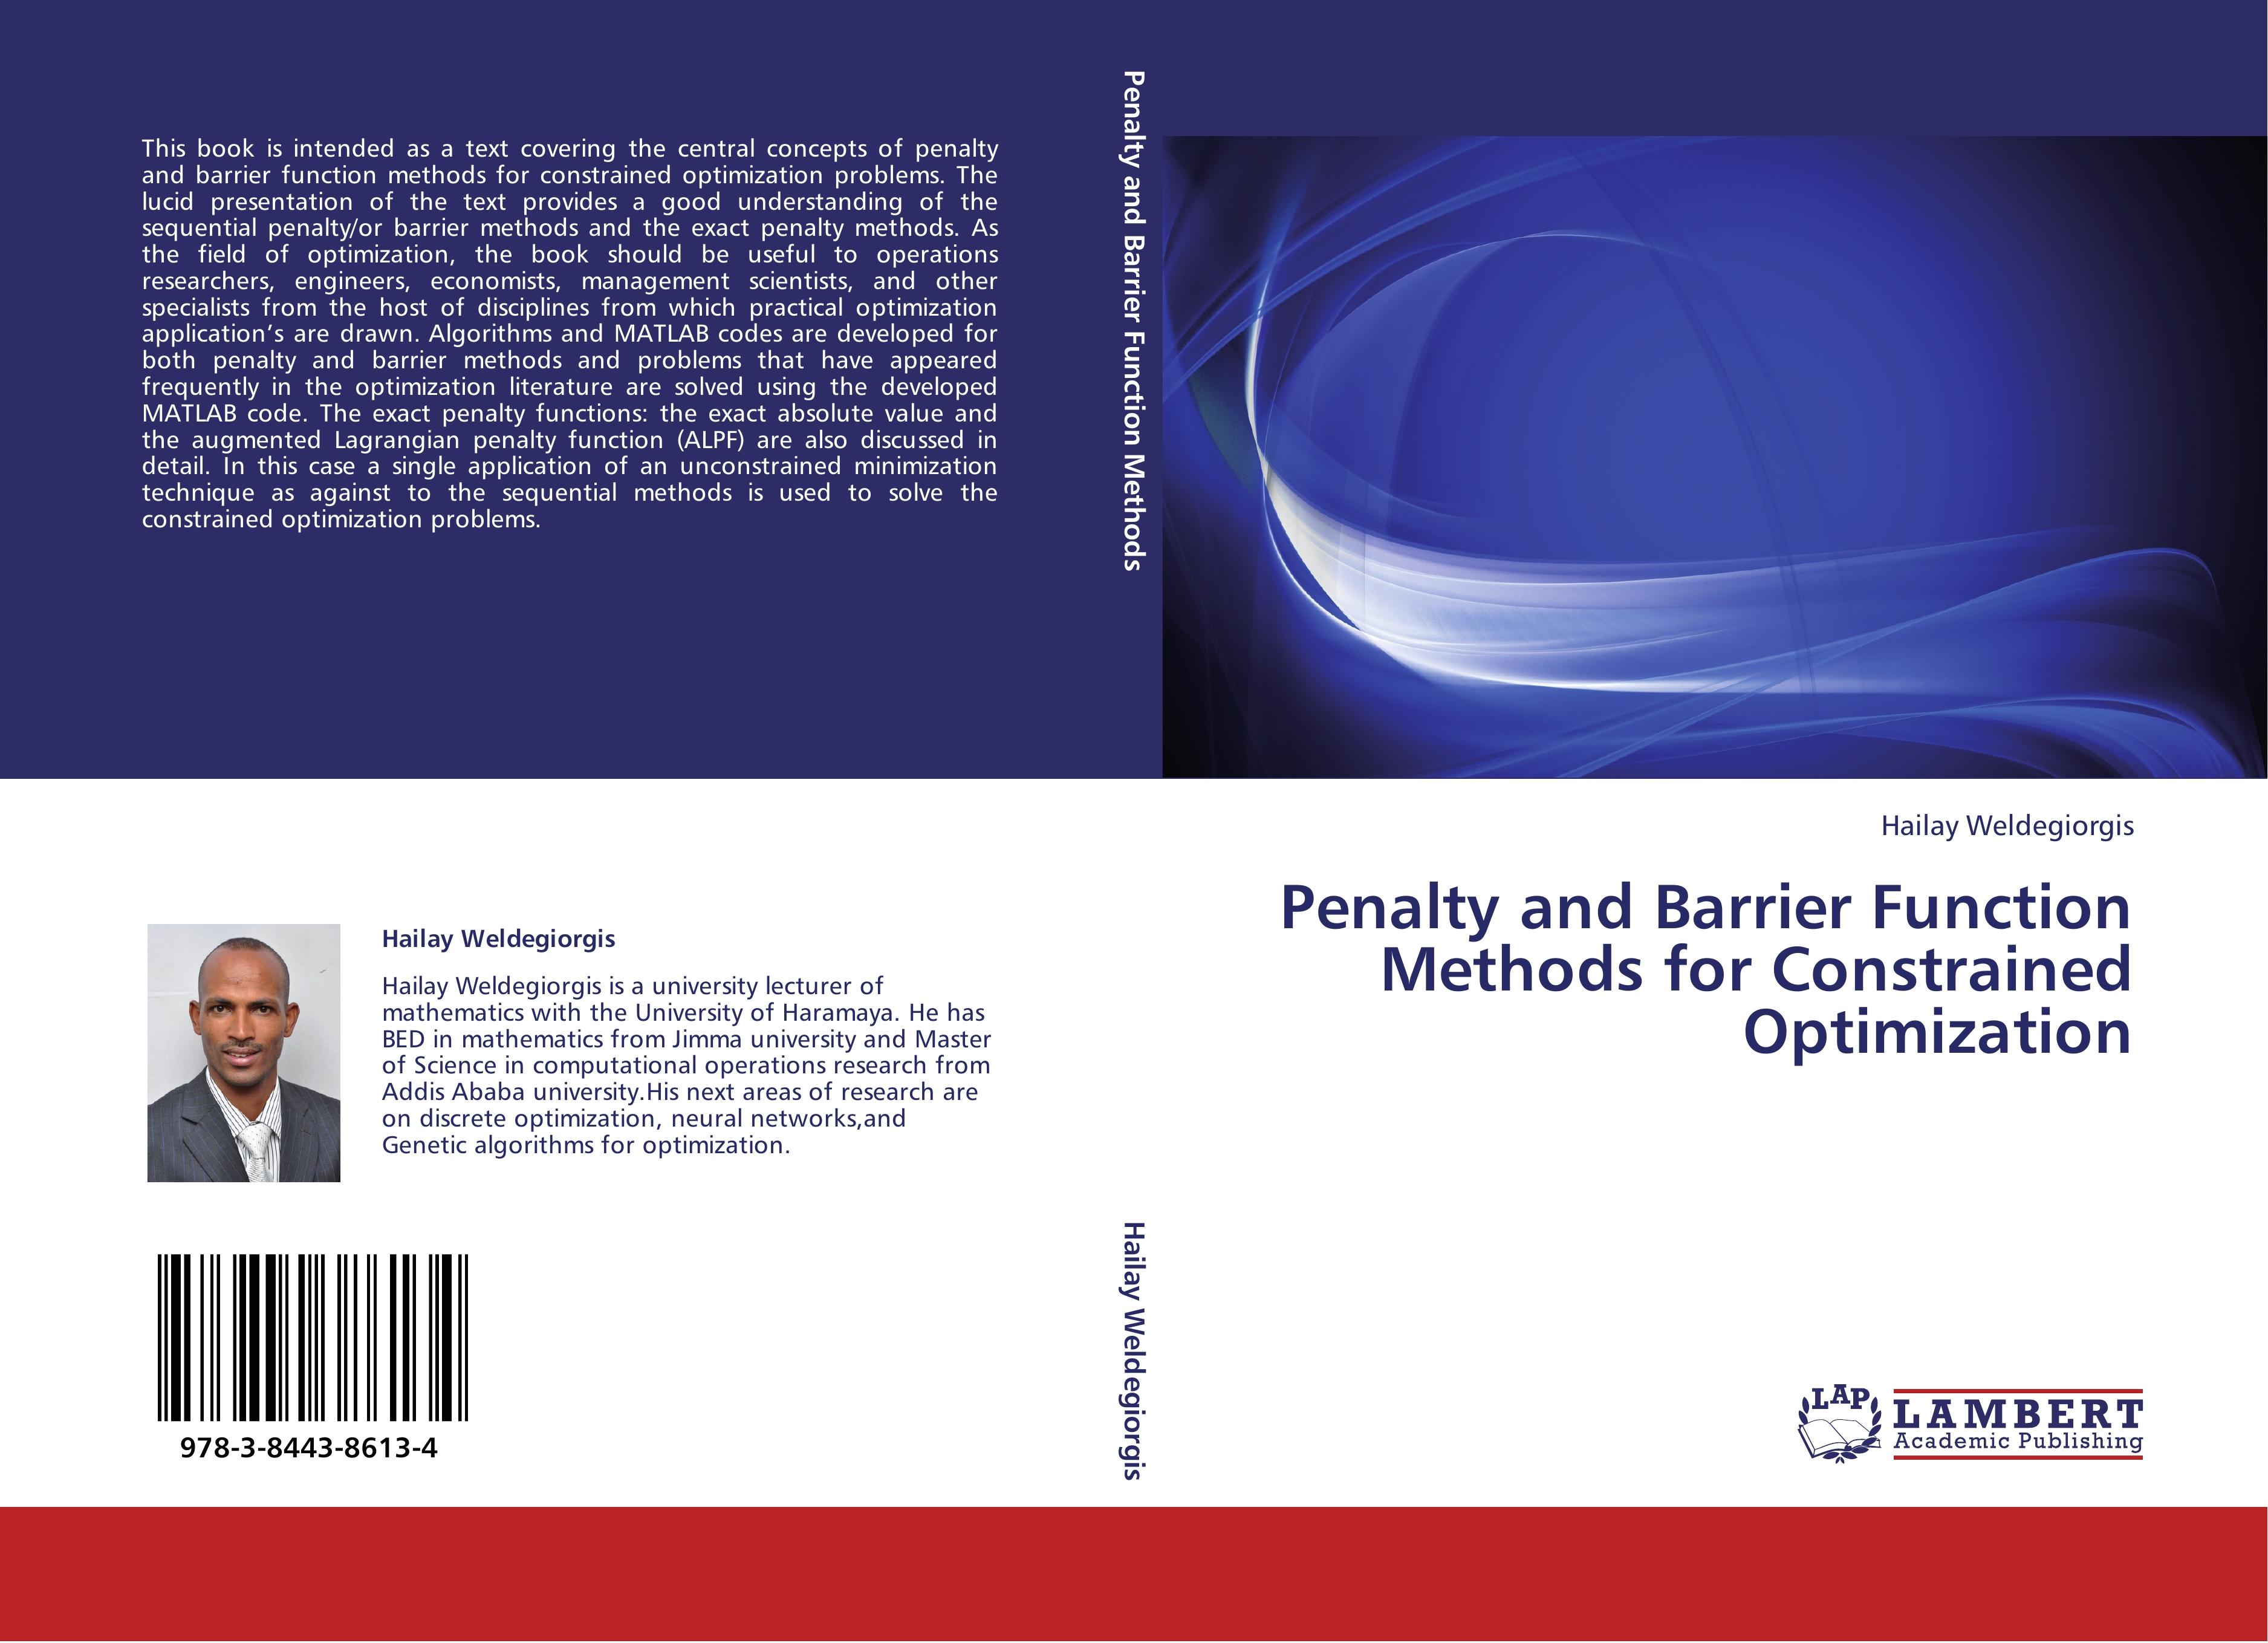 Penalty and Barrier Function Methods for Constrained Optimization / Hailay Weldegiorgis / Taschenbuch / Paperback / 128 S. / Englisch / 2011 / LAP LAMBERT Academic Publishing / EAN 9783844386134 - Weldegiorgis, Hailay